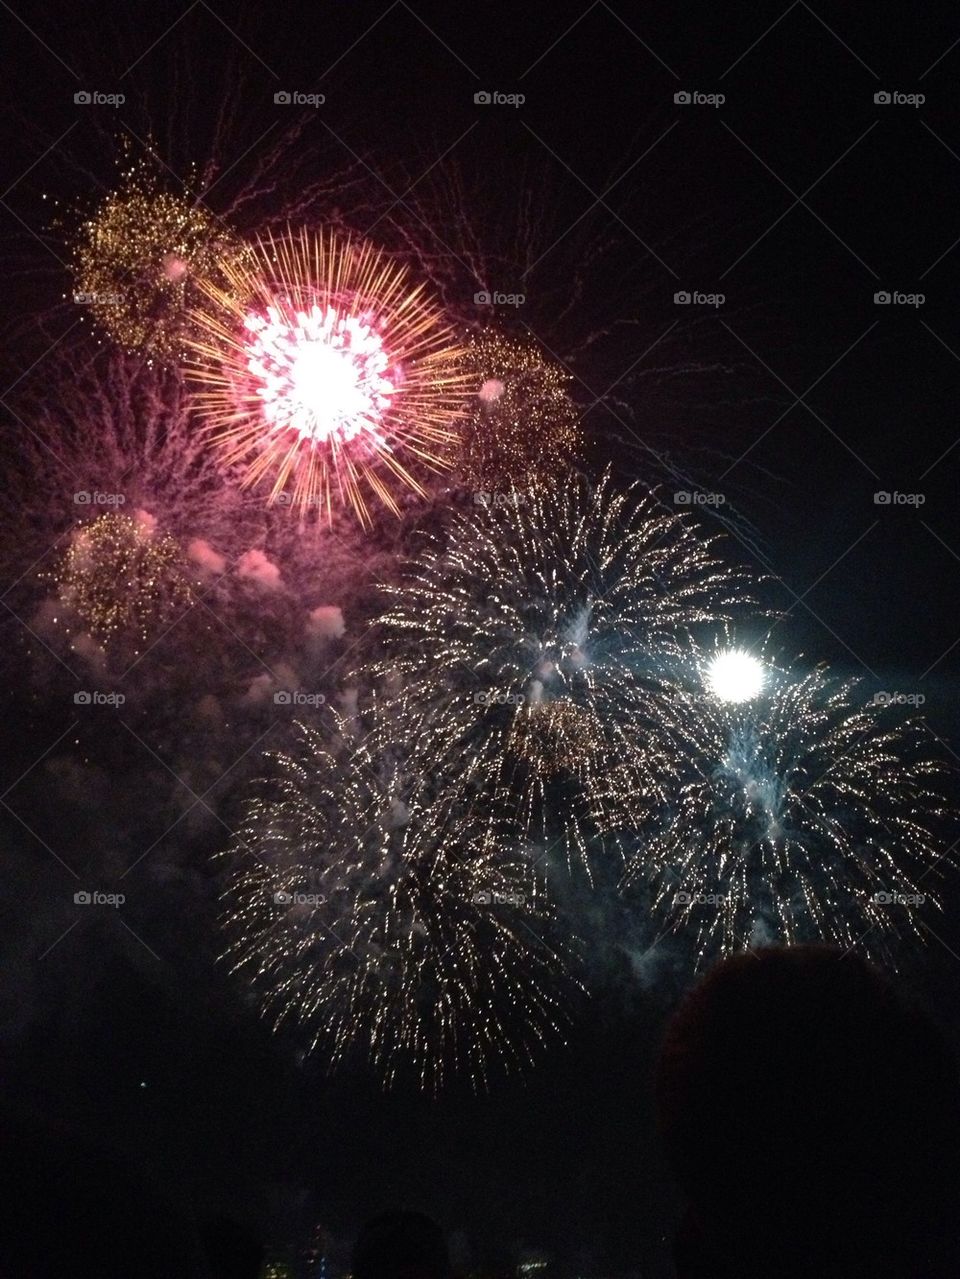 Boston fireworks spectacular